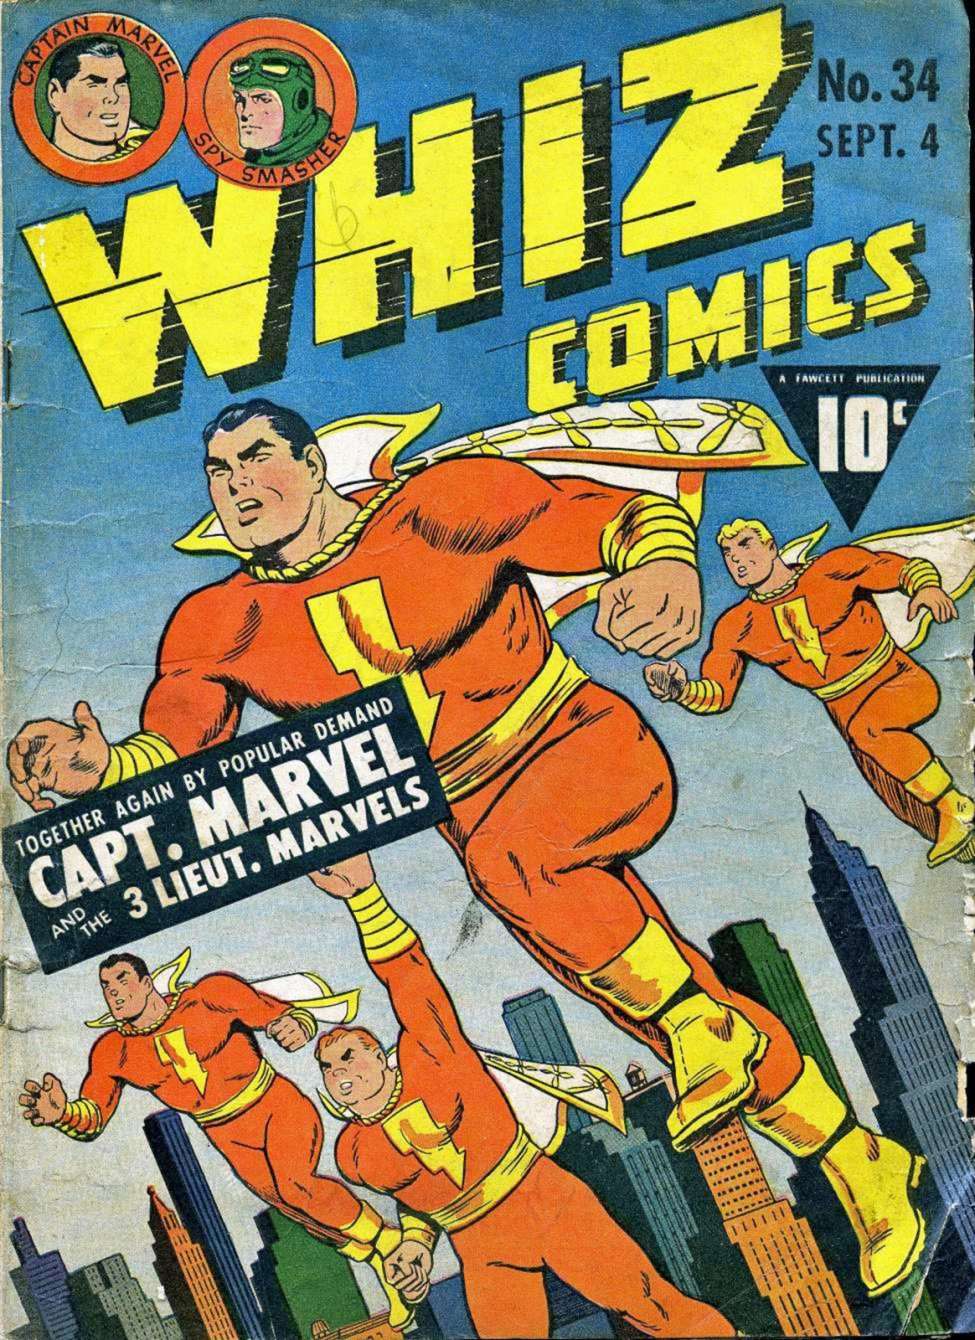 Comic Book Cover For Capt. Marvel Whiz Archives Vol 8